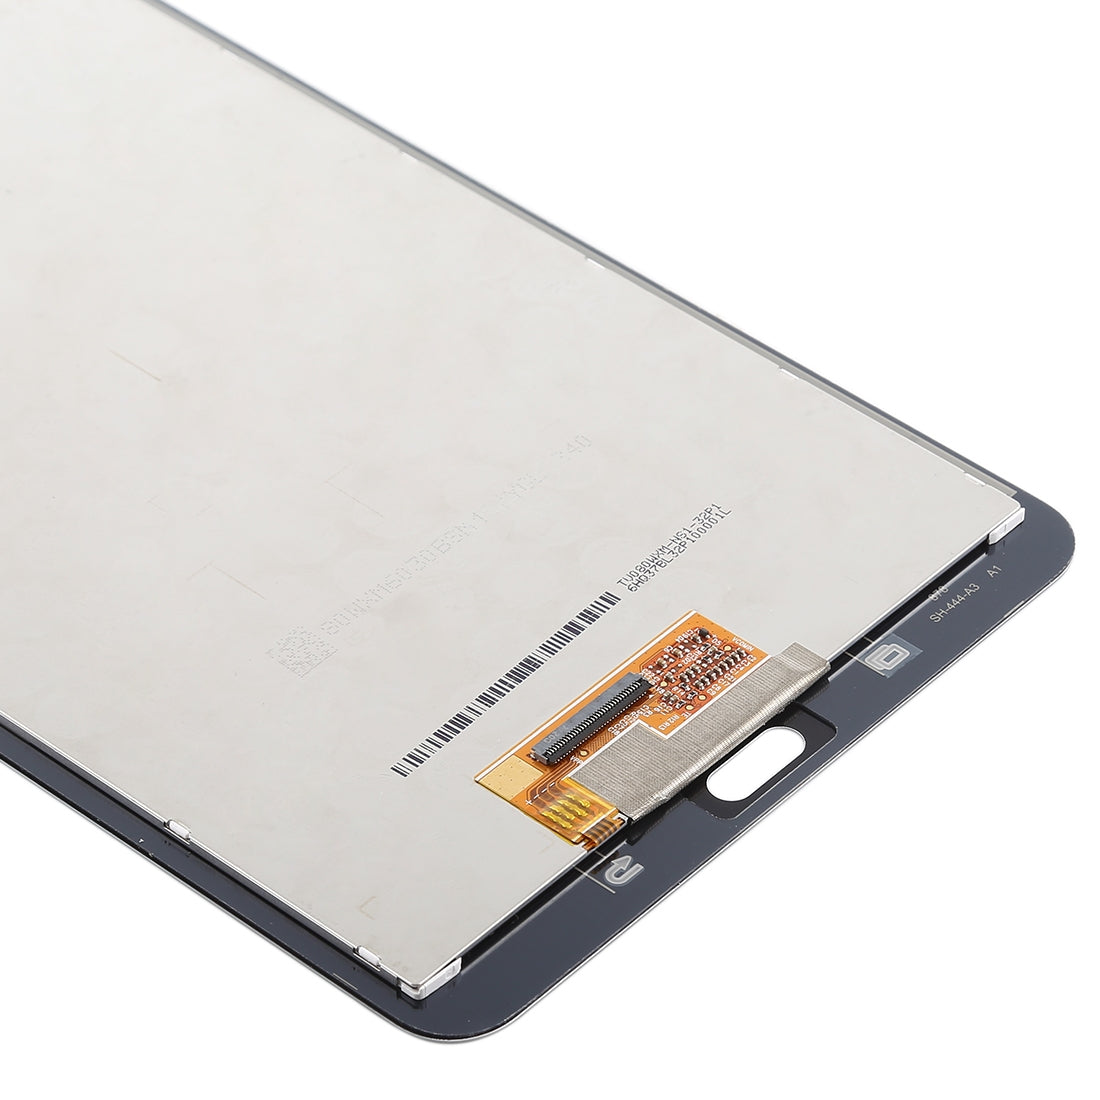 LCD + Touch Screen Samsung Galaxy Tab E 8.0 T377 (Wifi Version) White